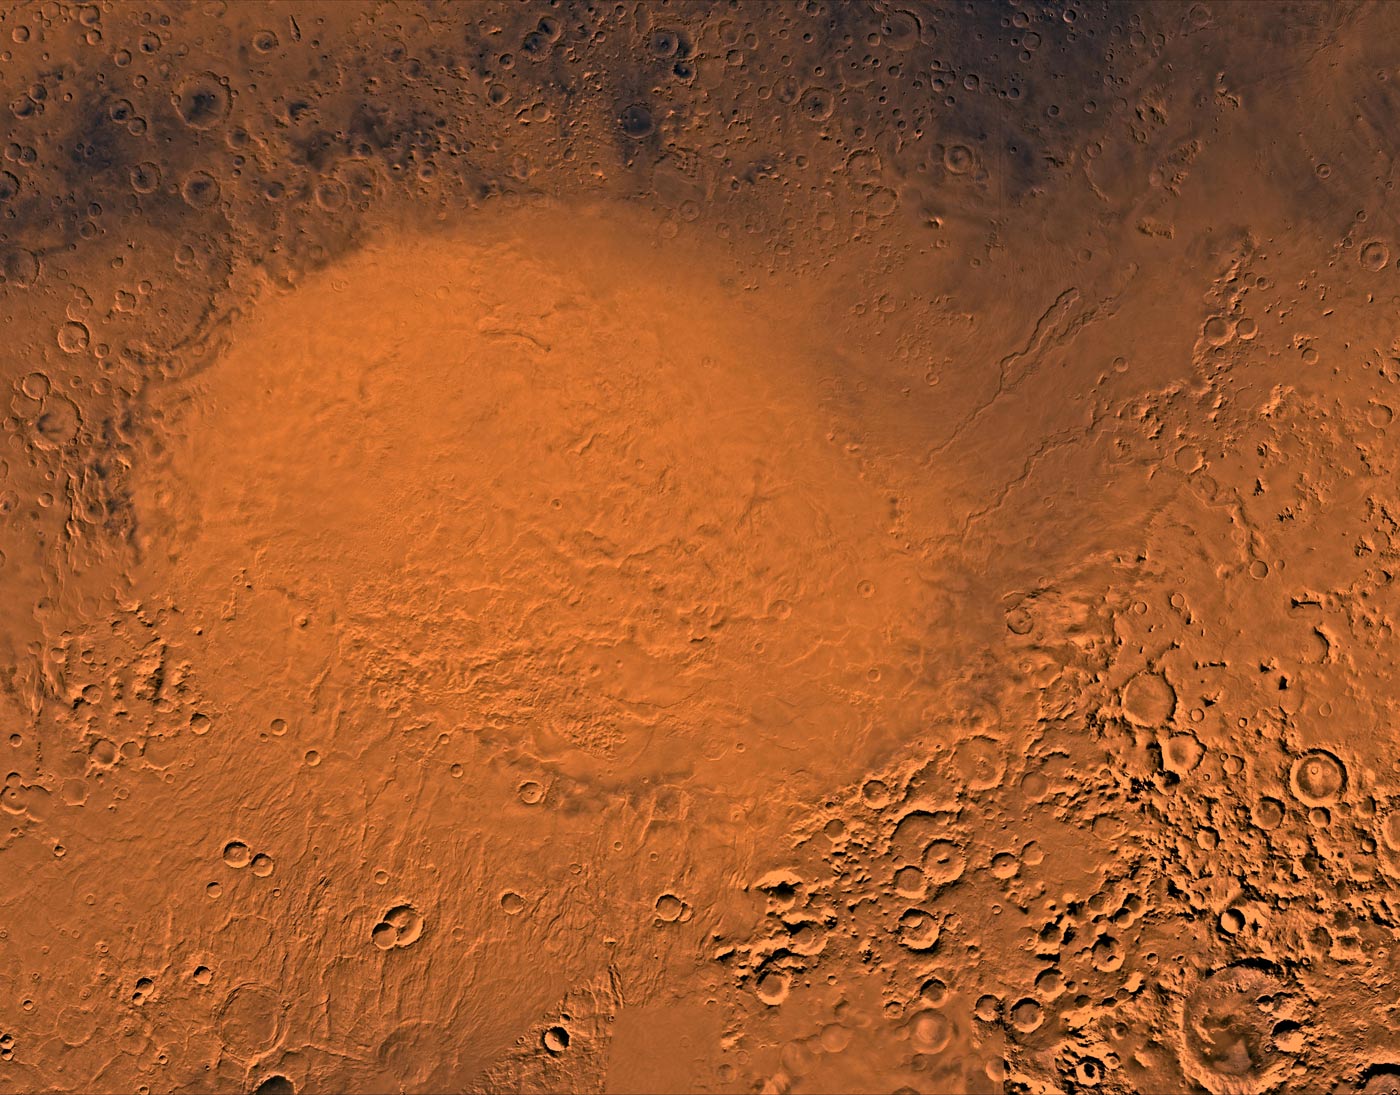 Hellas Basin of Mars